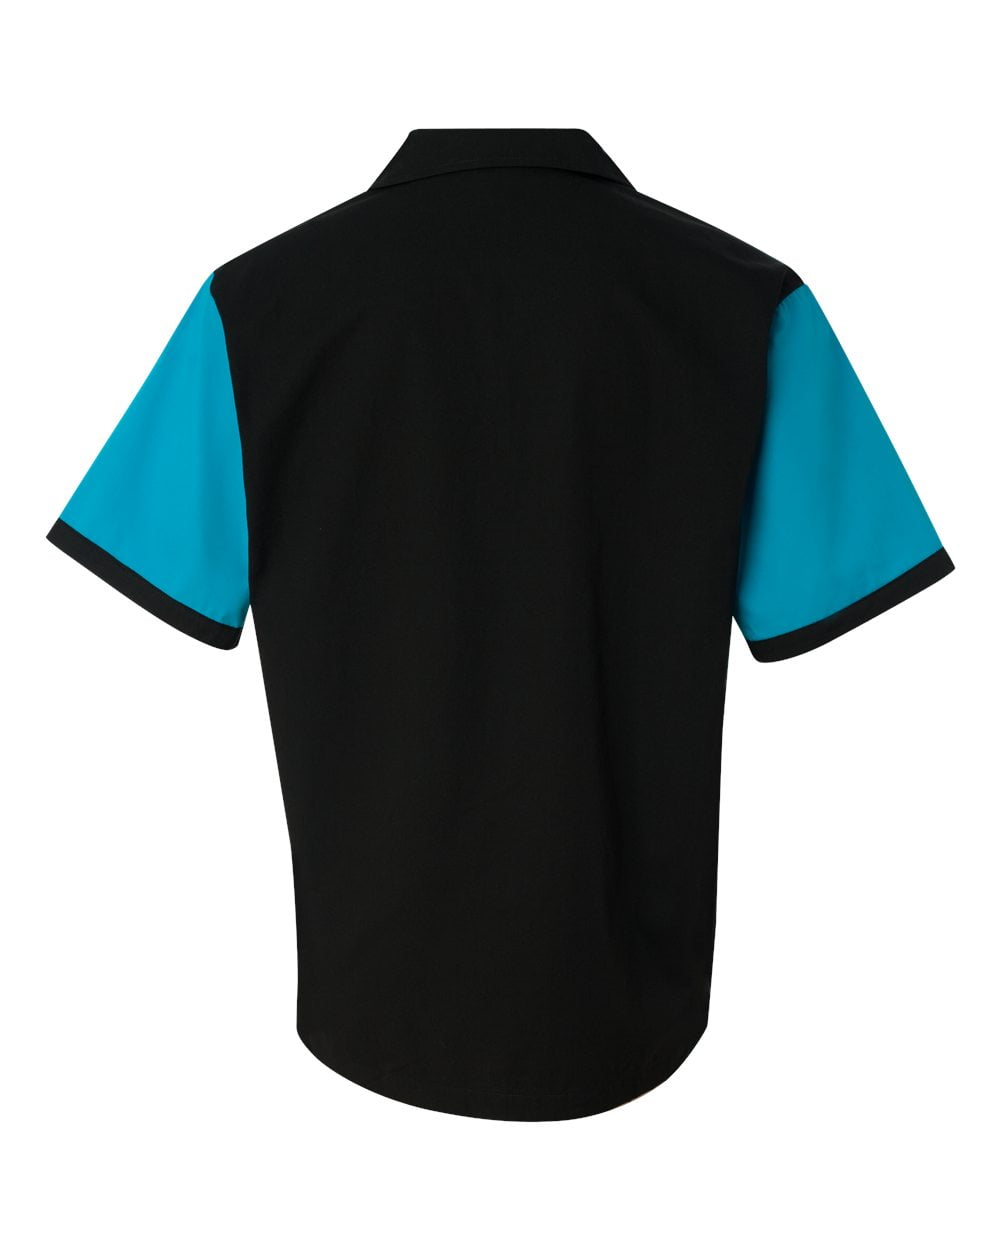 Hilton Cruiser Bowling Shirt Size up to 3XL - Walmart.com